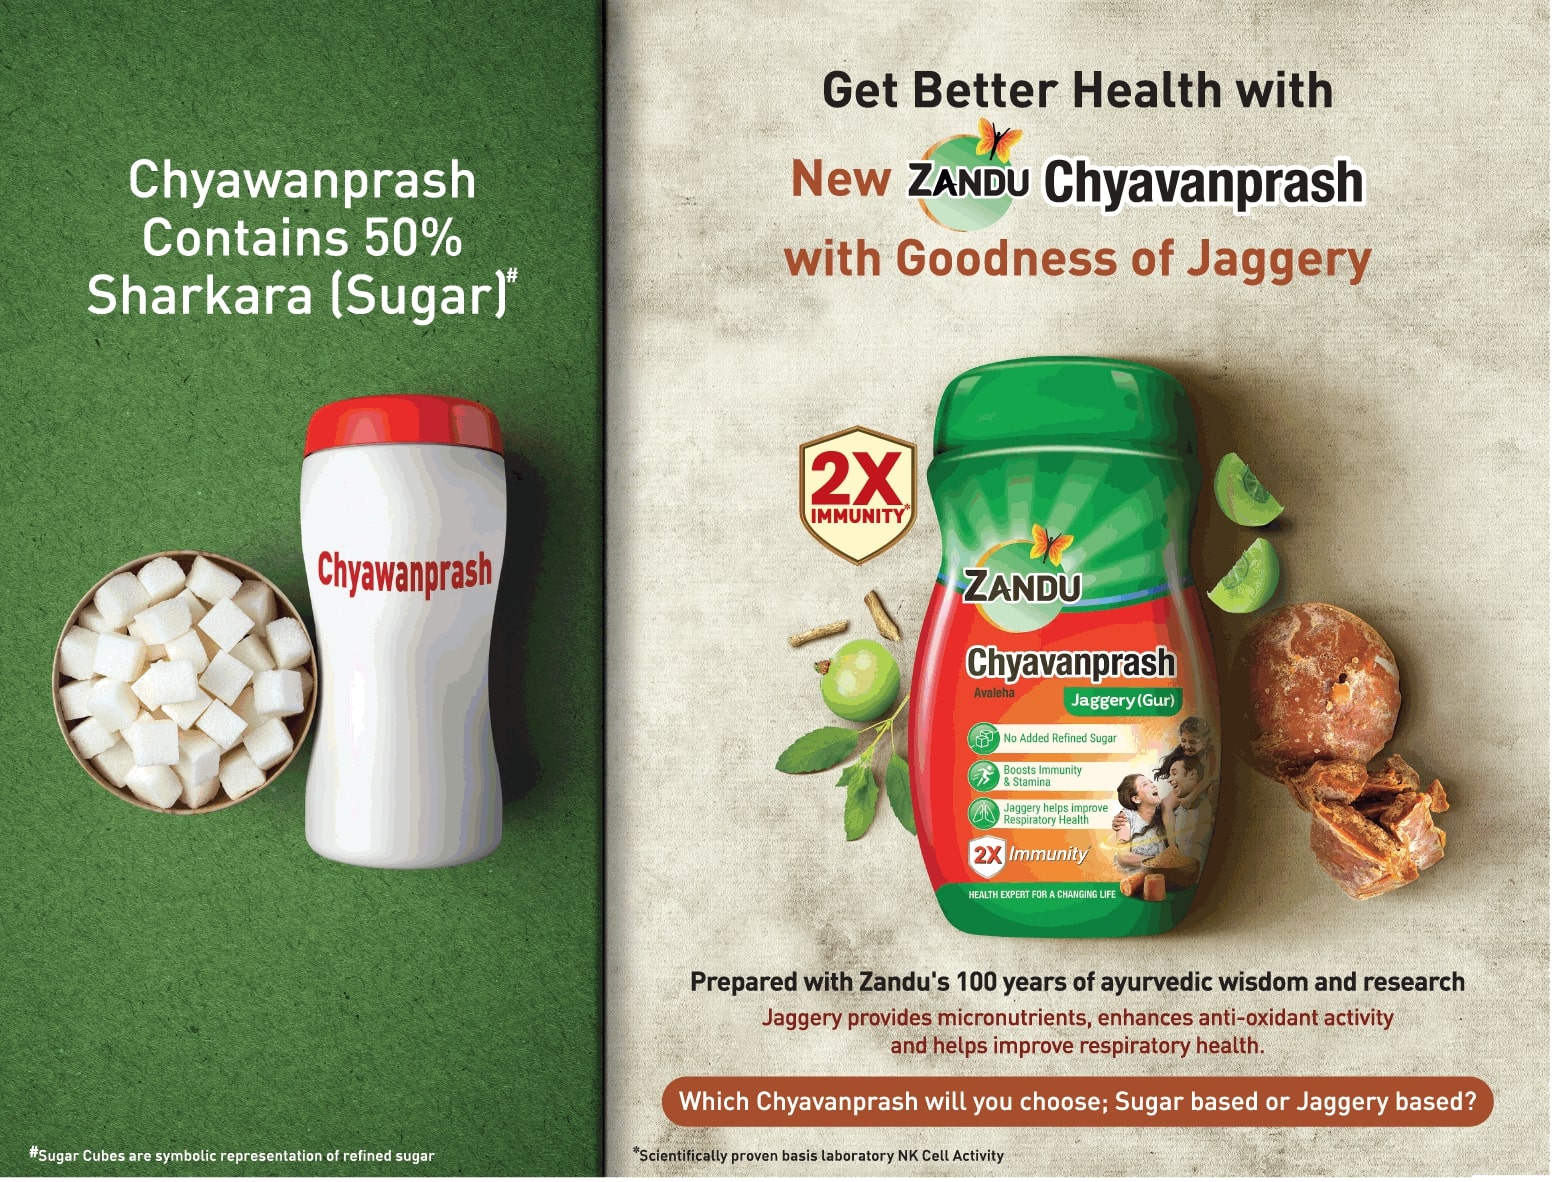 zandu-chyavanprash-get-better-health-ad-bombay-times-13-02-2021